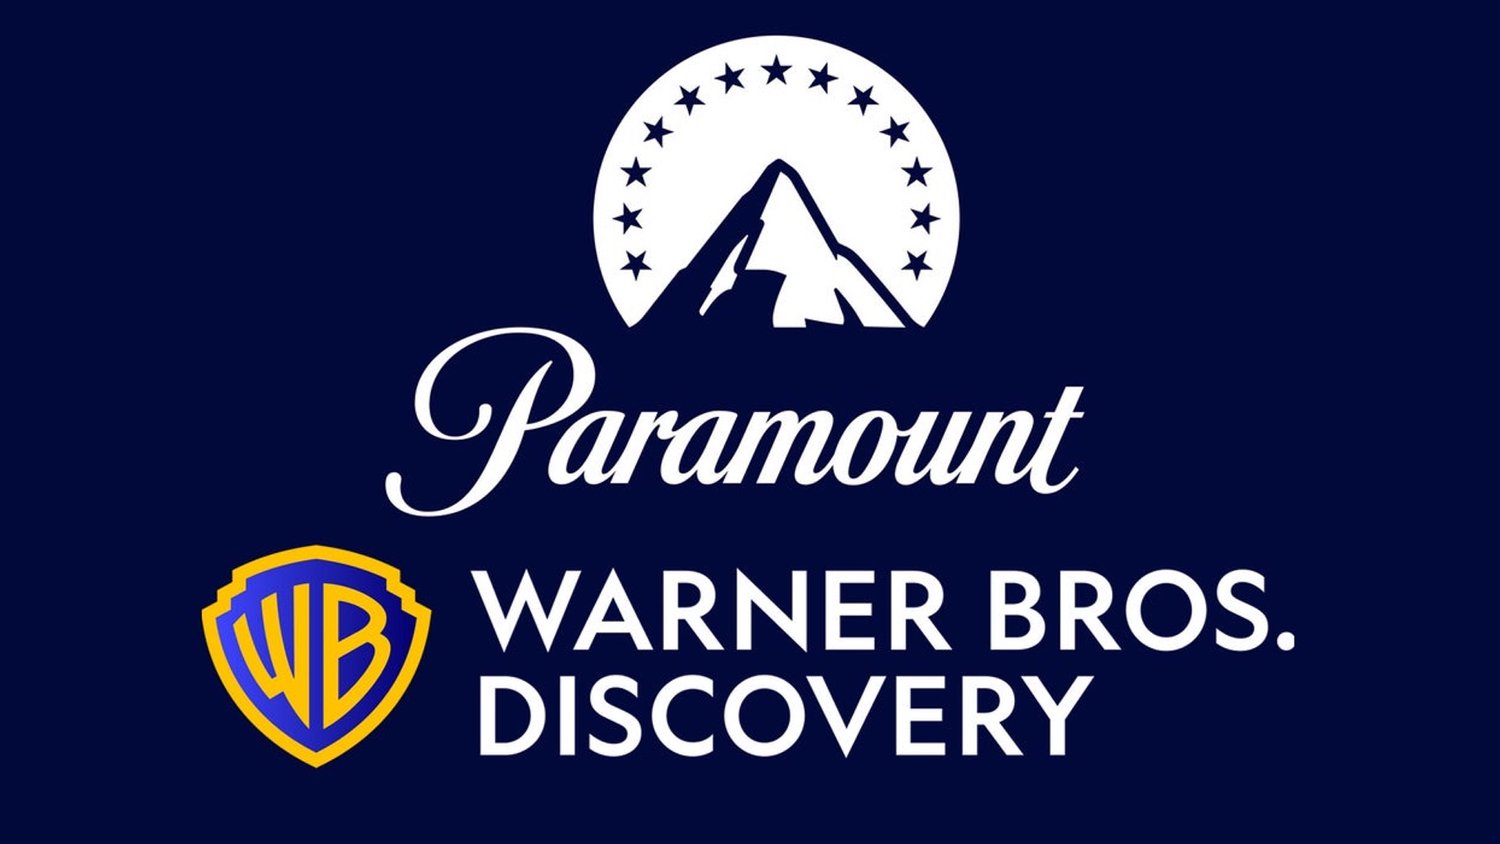 Warner Bros. Discovery et Paramount Global envisagent une grande fusion